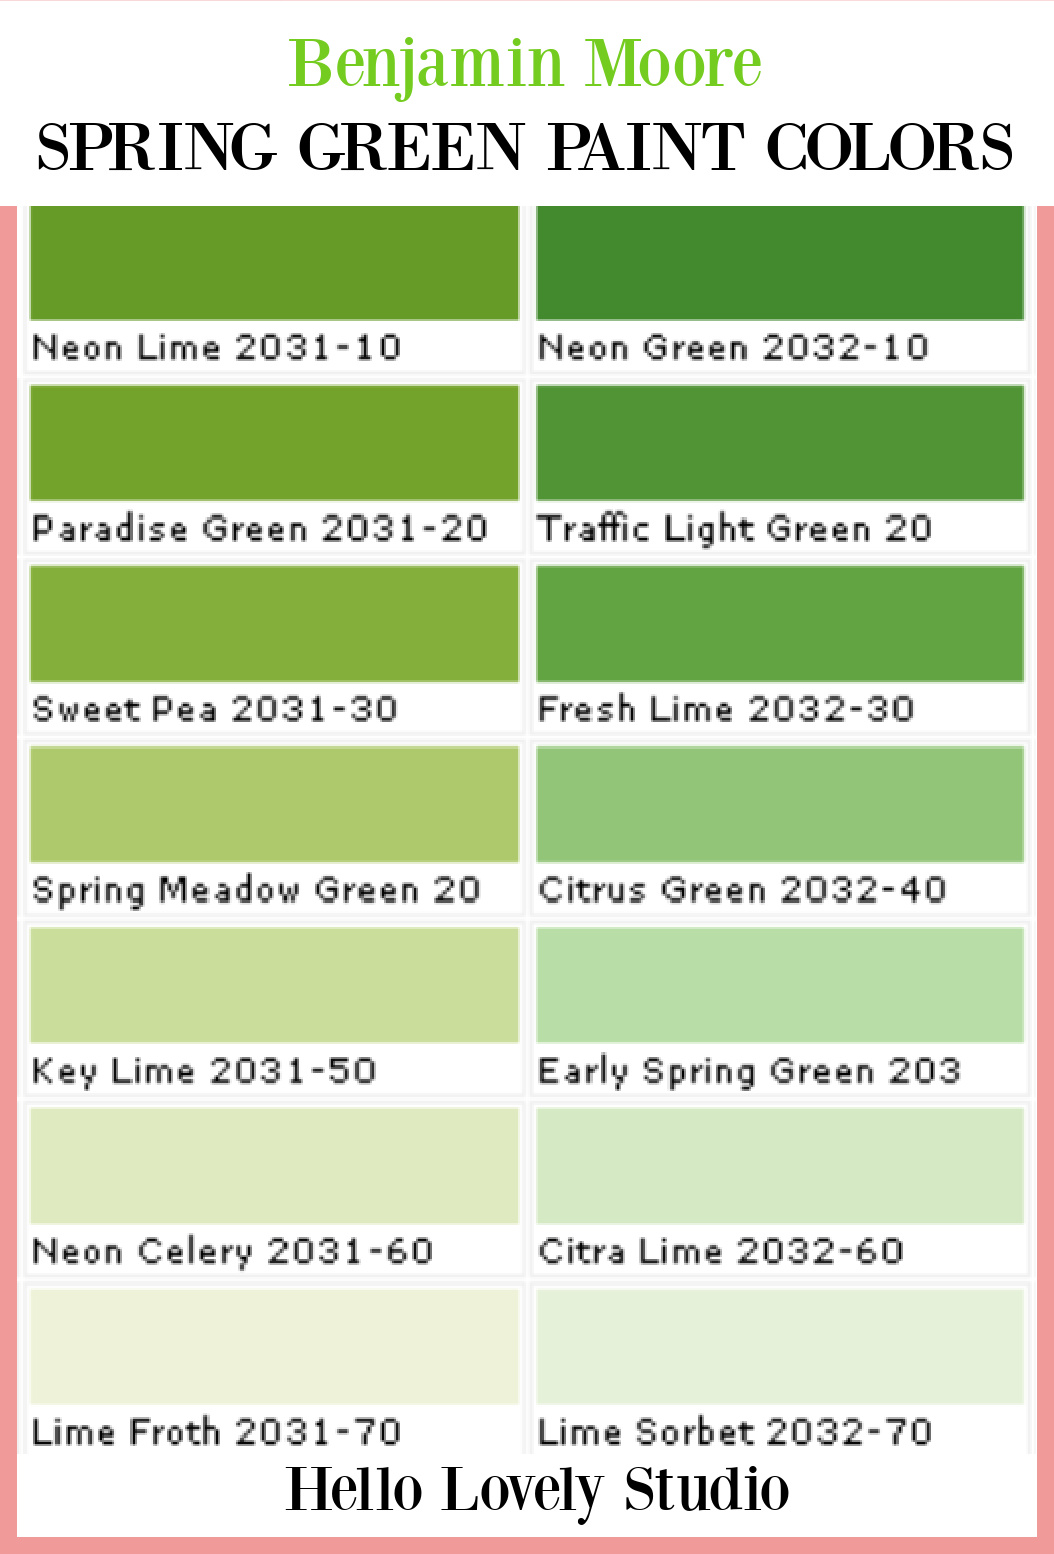 Benjamin Moore Spring Green Paint Color Ideas - Hello Lovely Studio. #greenpaintcolors #springgreen #celerygreen